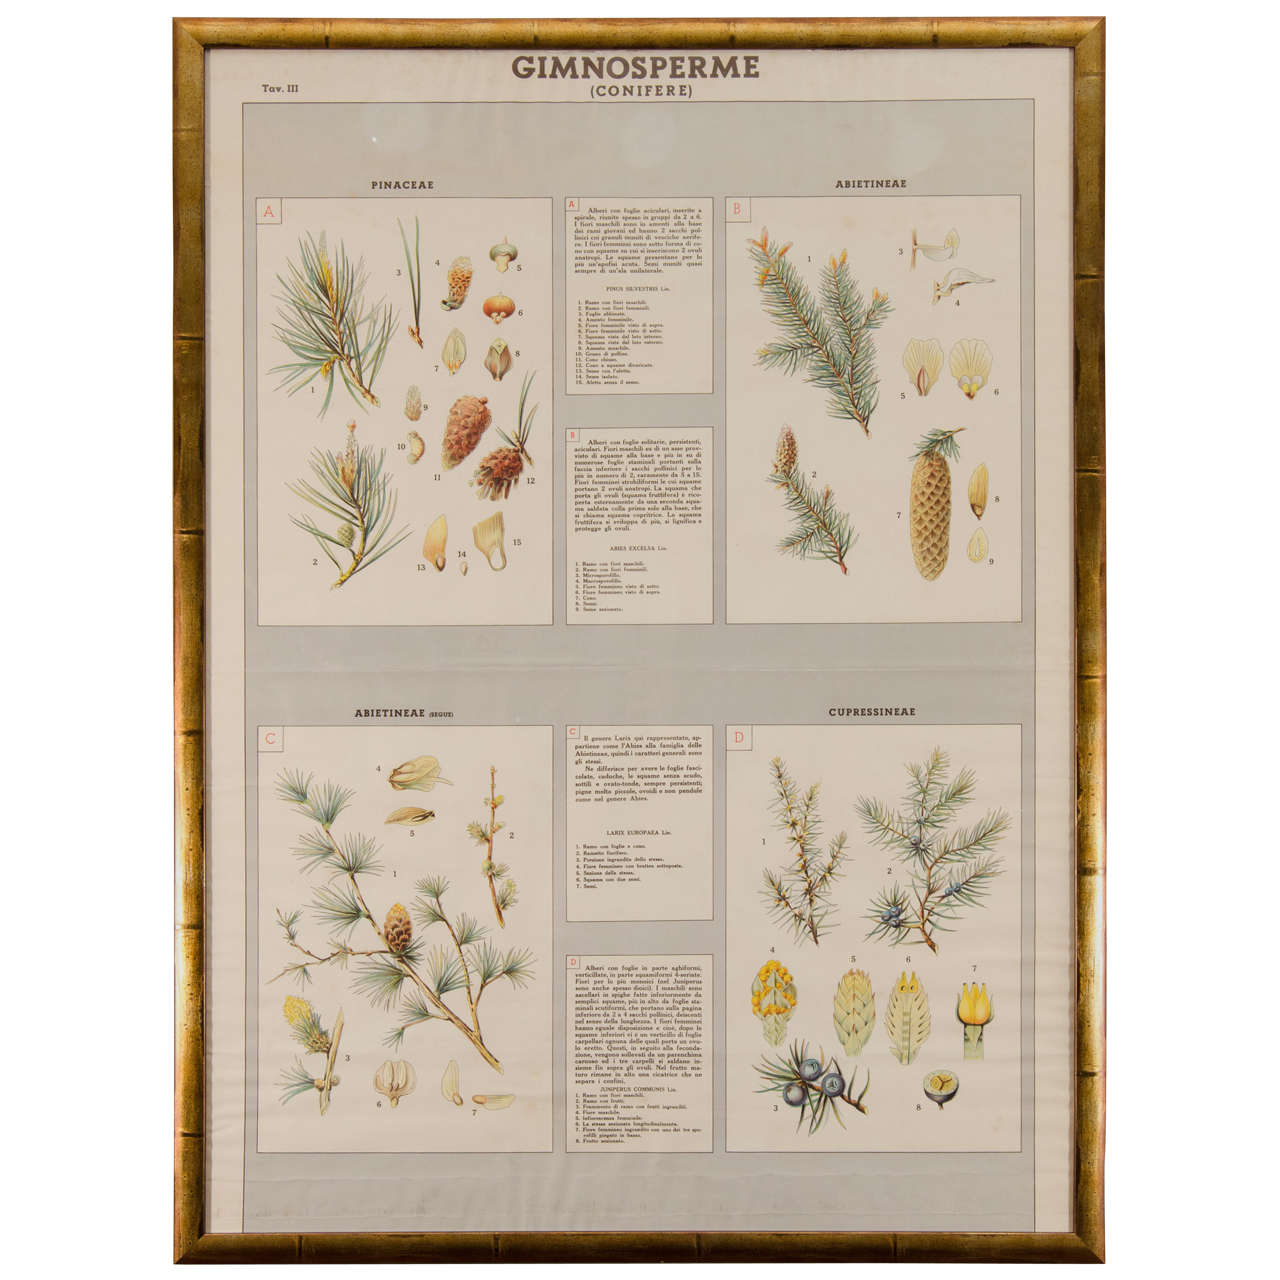 Early 20th Century Italian Botanical Print